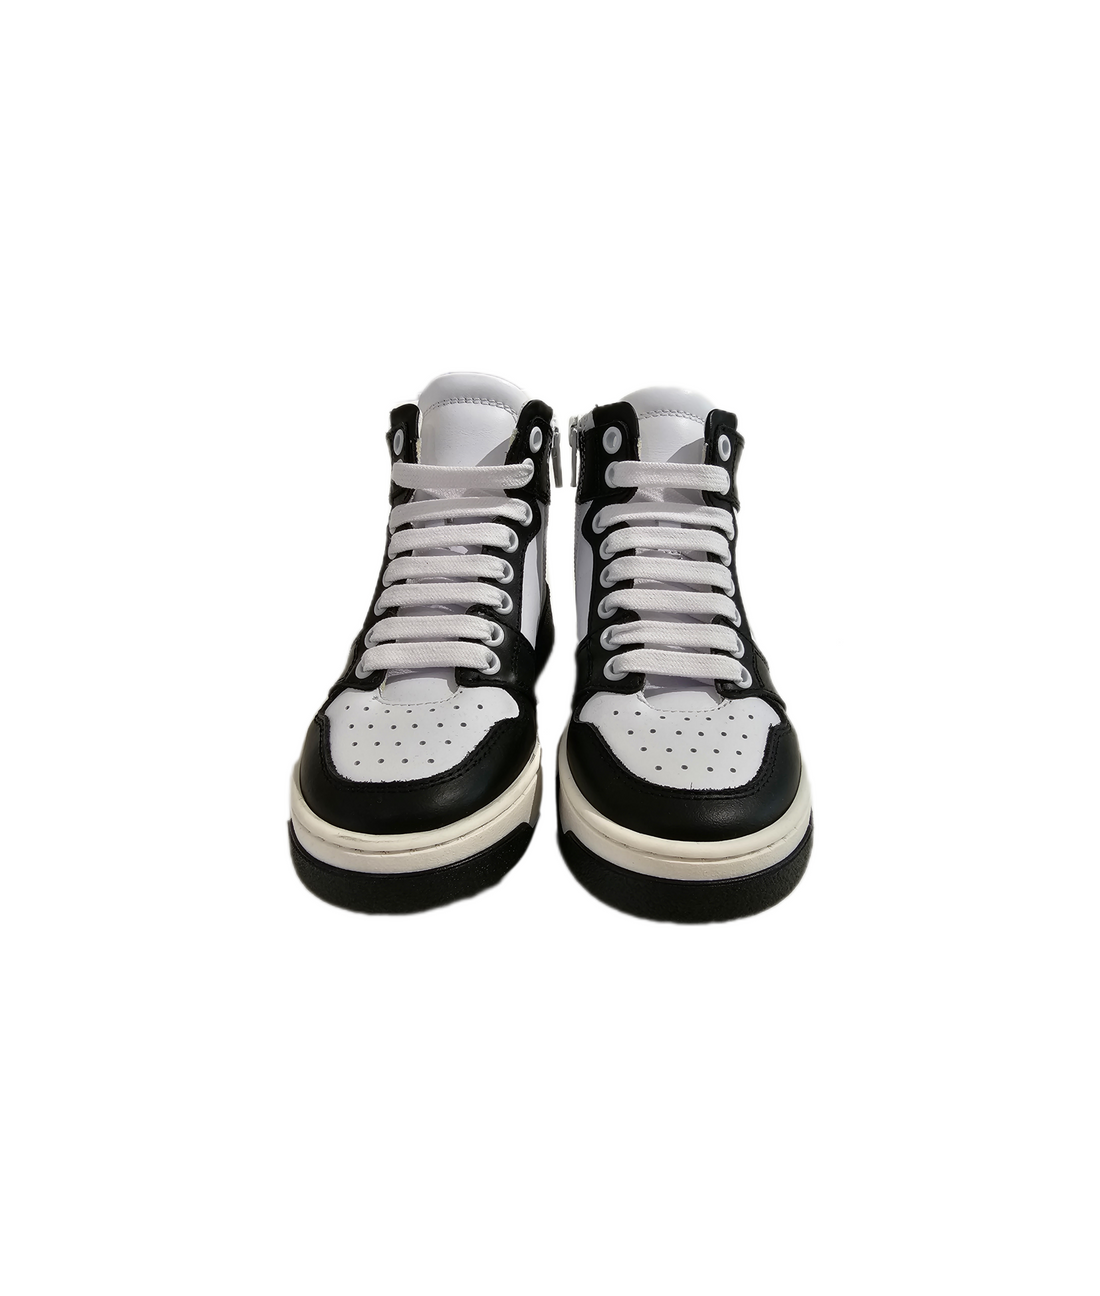 Sneakers skóra czarna łączona MSGM 123 4038 123/02c